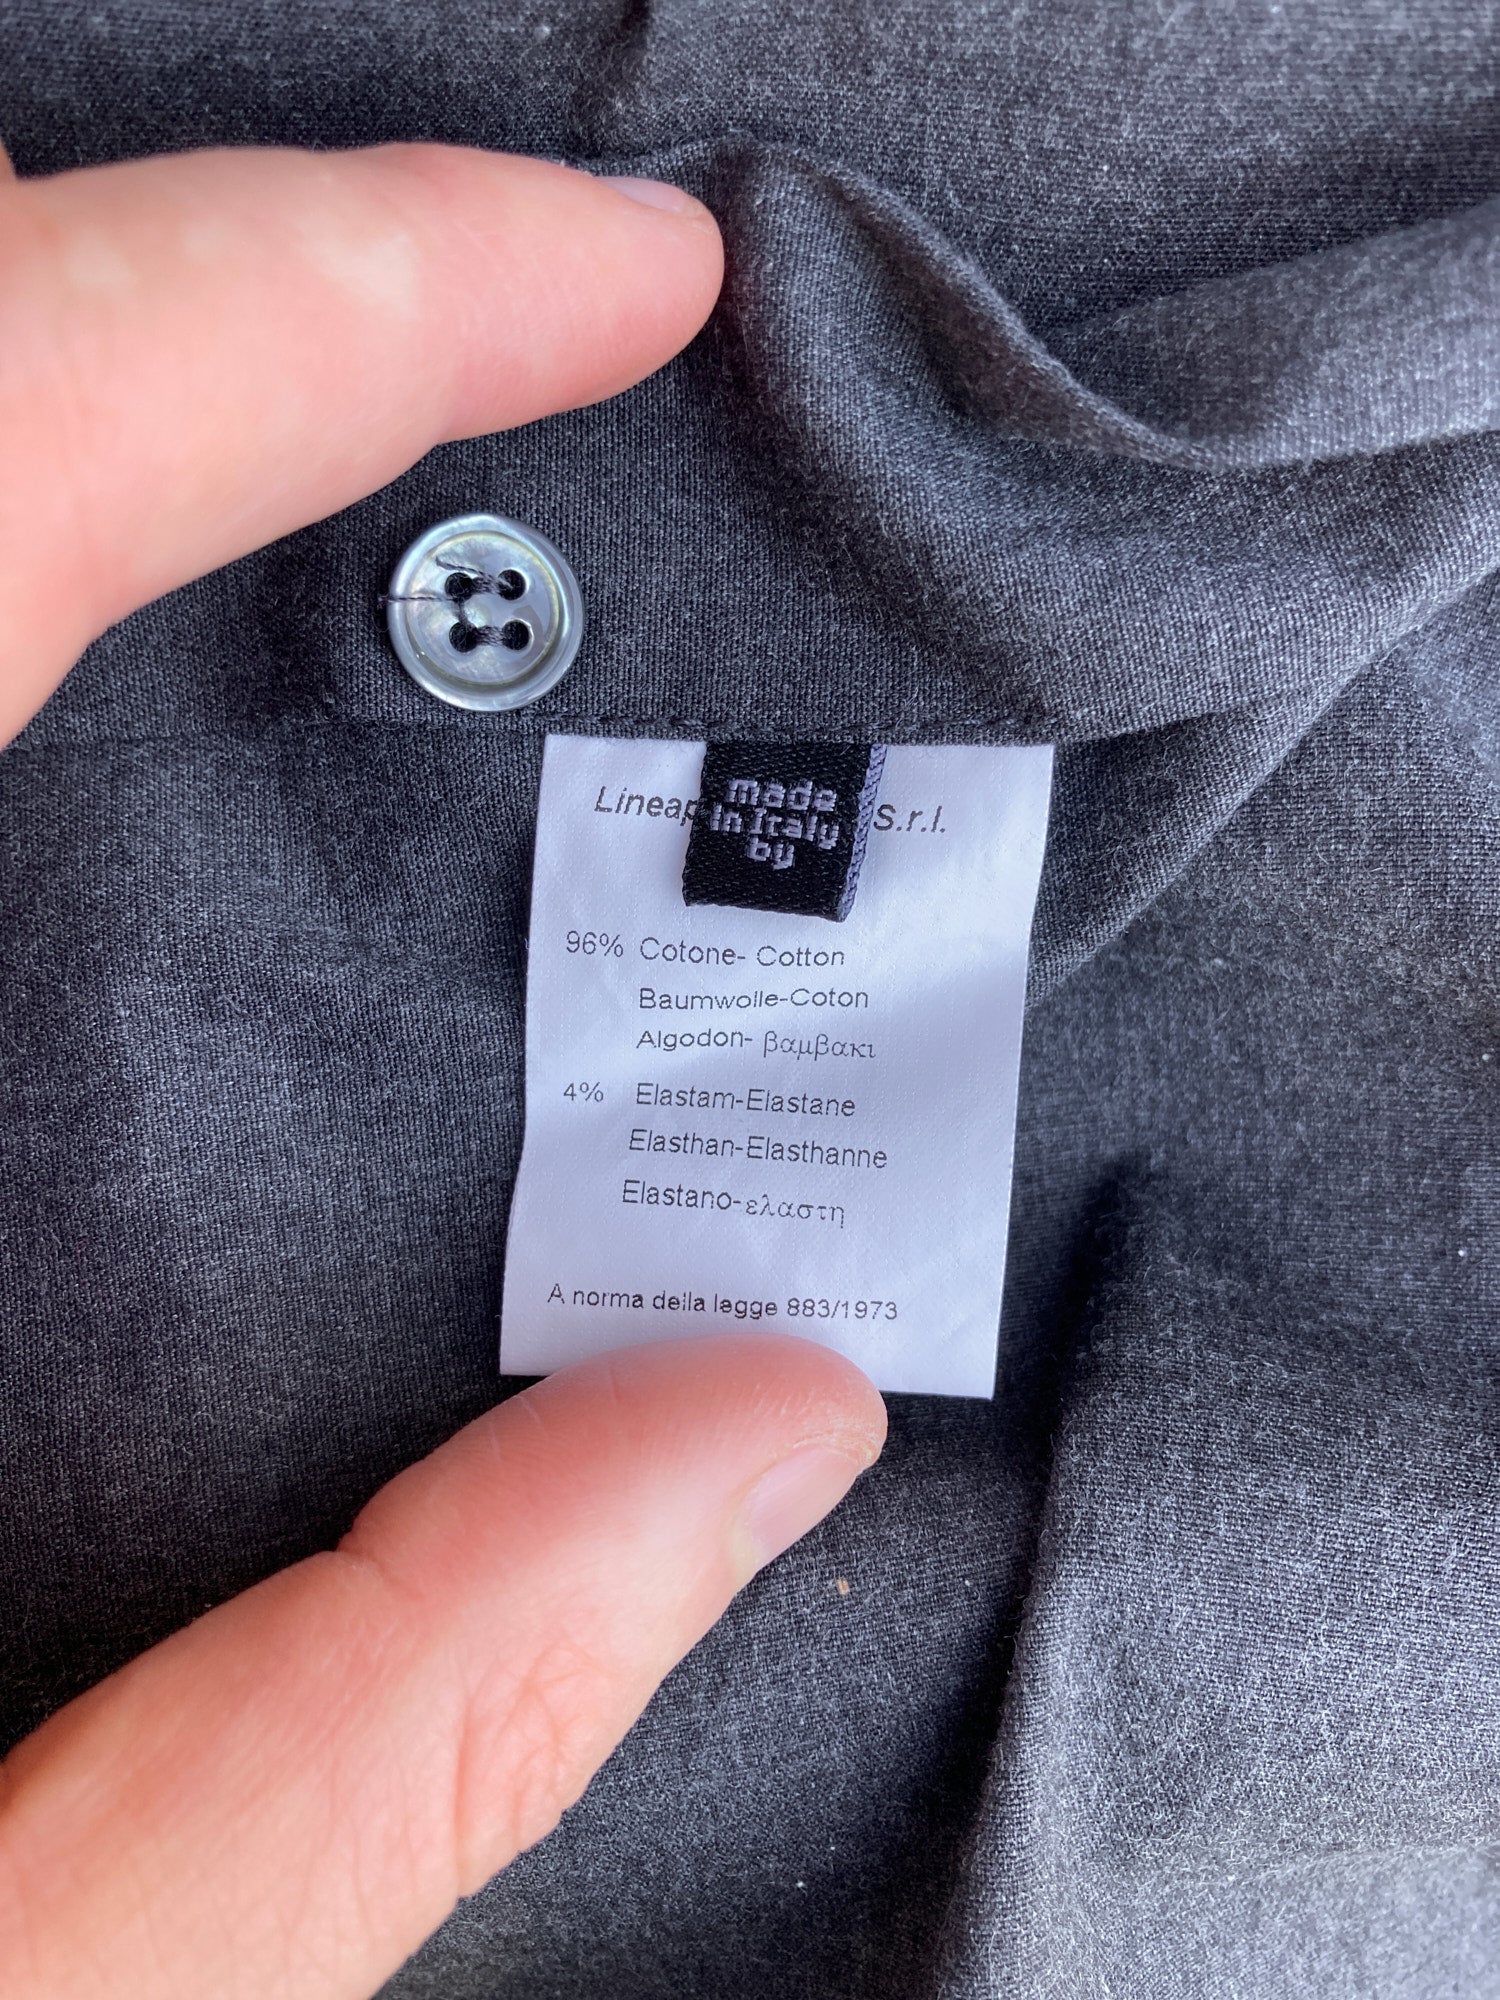 Samsonite dark grey stretch cotton shirt - approx mens size M - L